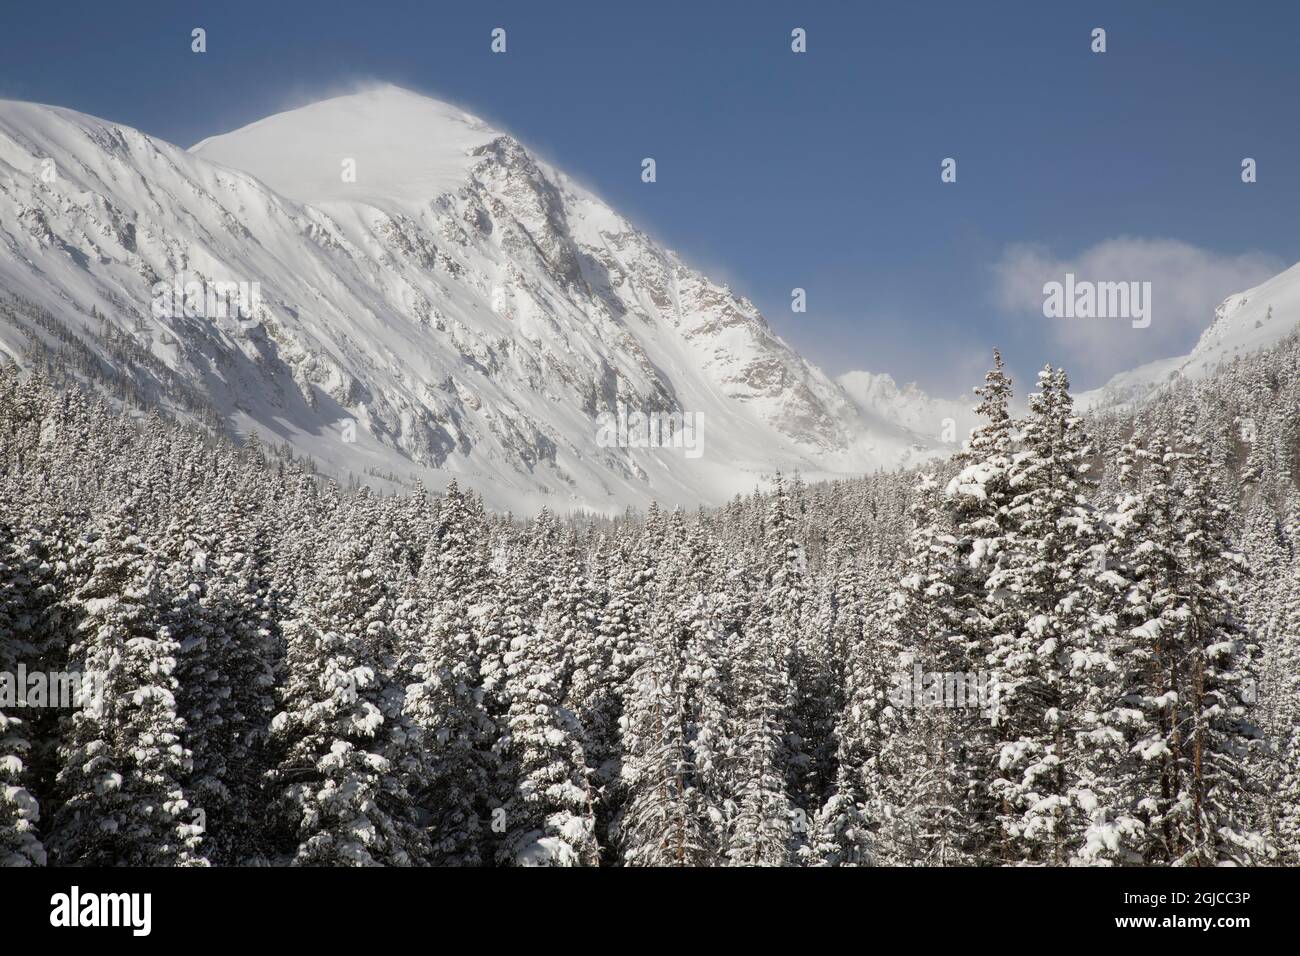 USA, Colorado, Ten Mile Range. Quandary Peak after winter snowfall. Credit as: Don Grall / Jaynes Gallery / DanitaDelimont.com Stock Photo